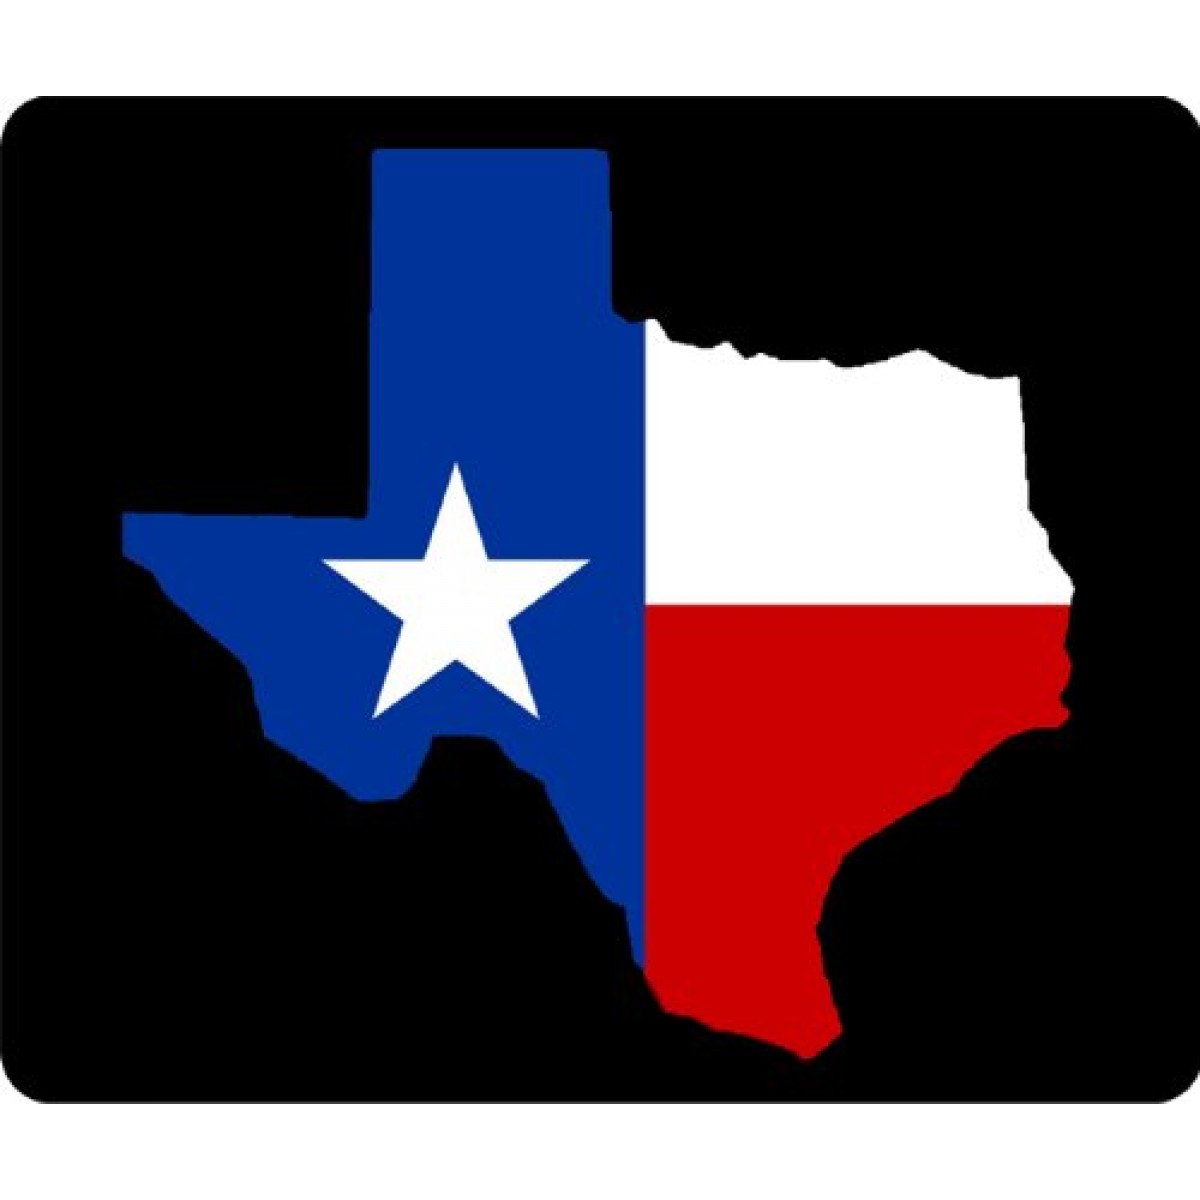 Texas Outline Cliparts.co